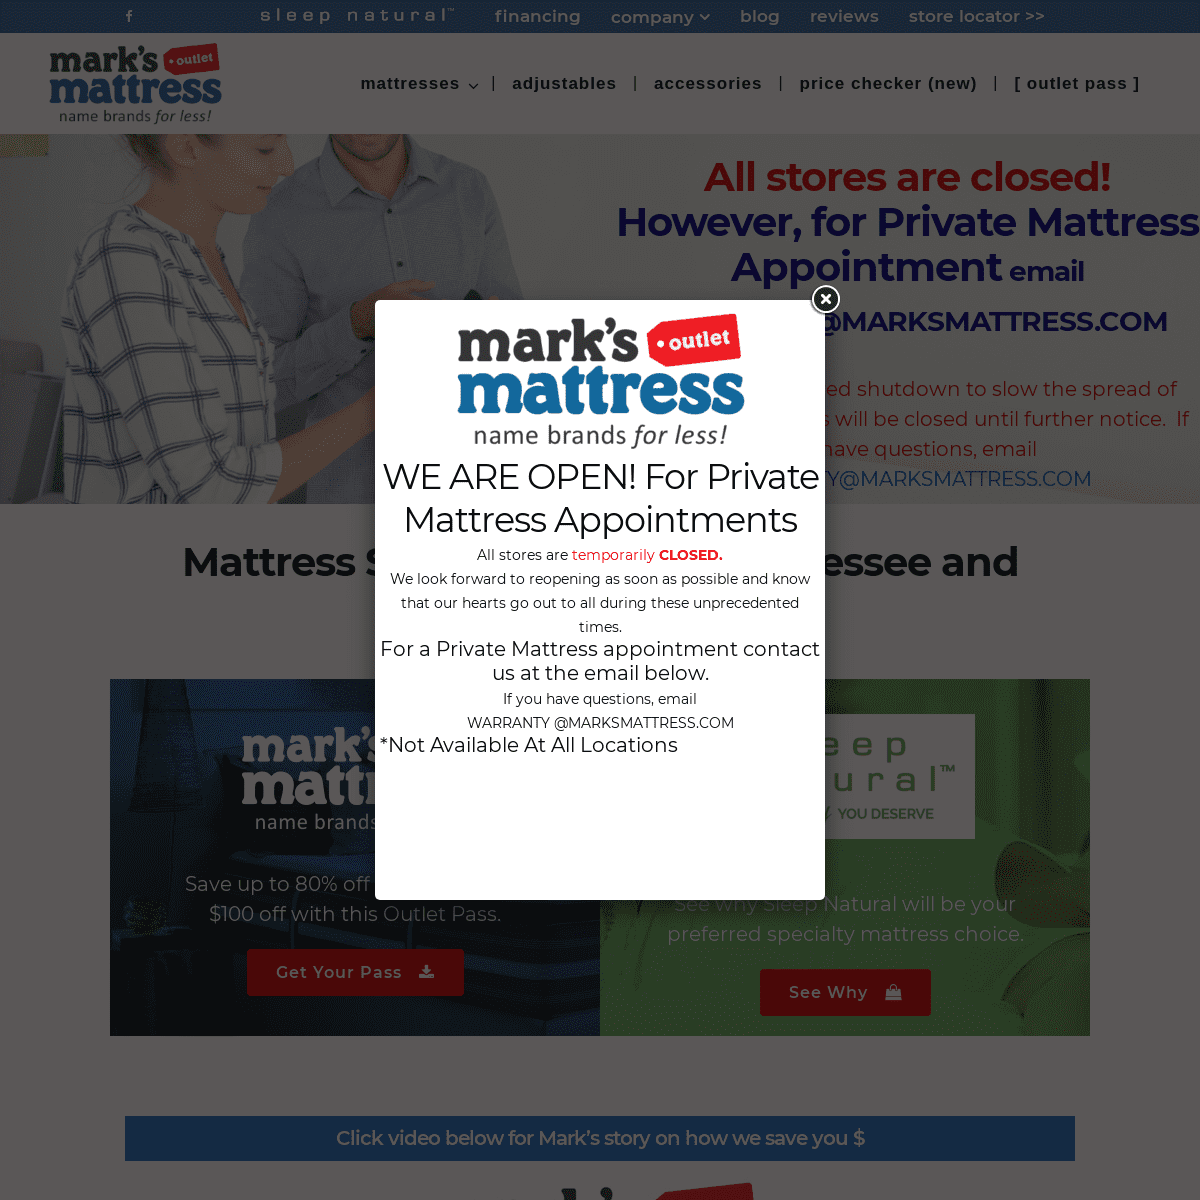 A complete backup of marksmattress.com